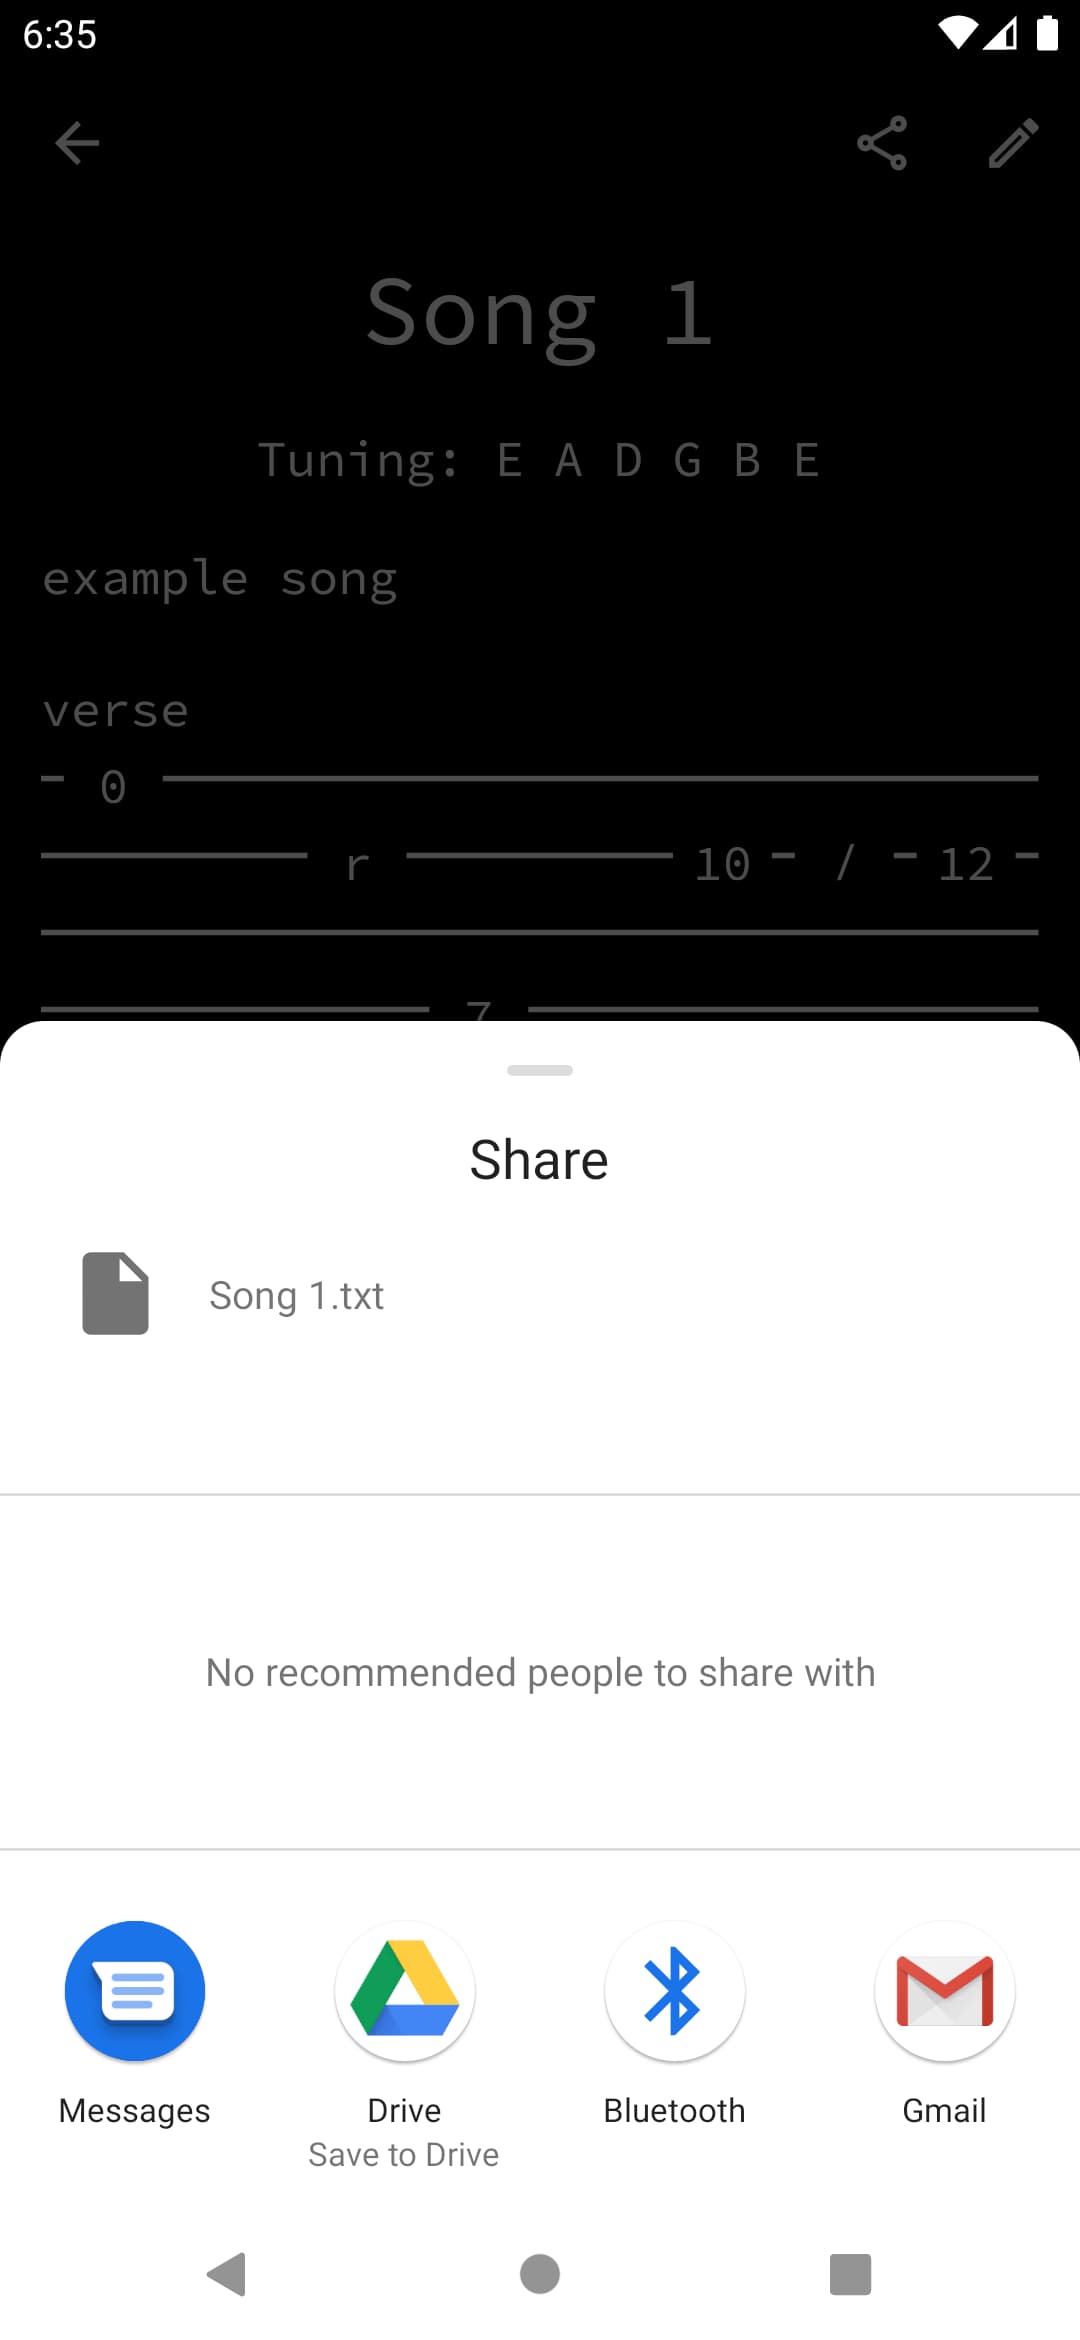 a screenshot of the sharing interface